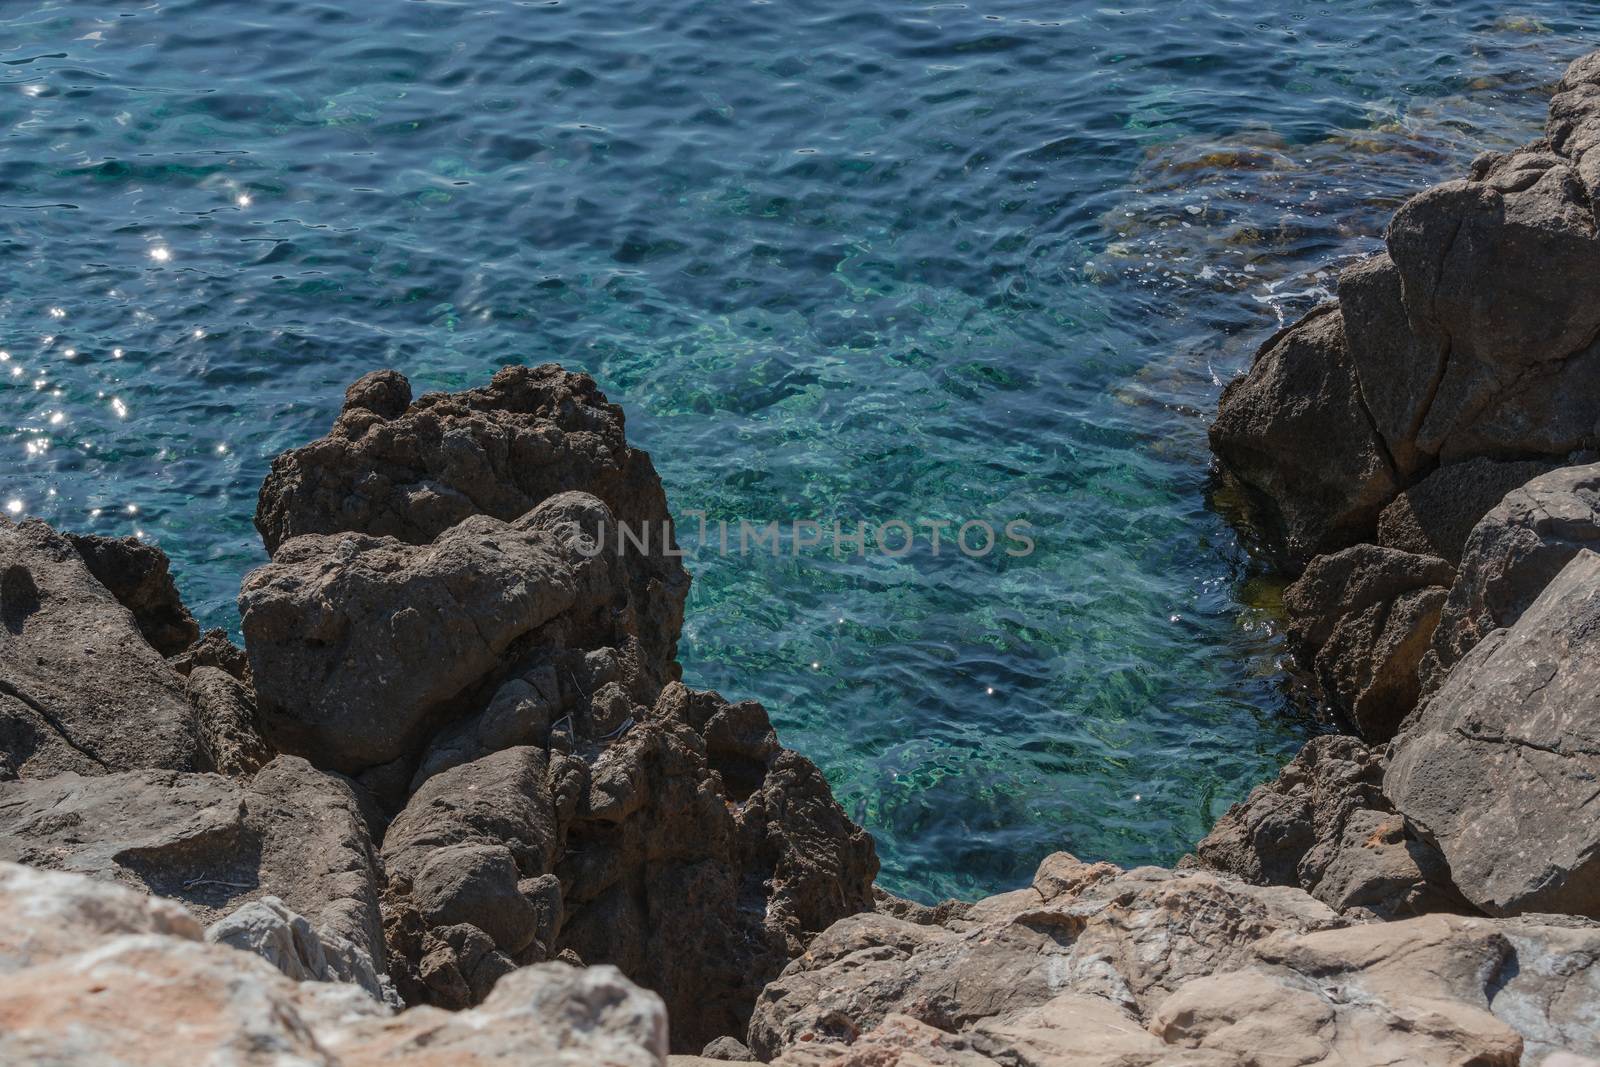 Small rocks in the blue Mediterranean Sea on Majorca's coast.